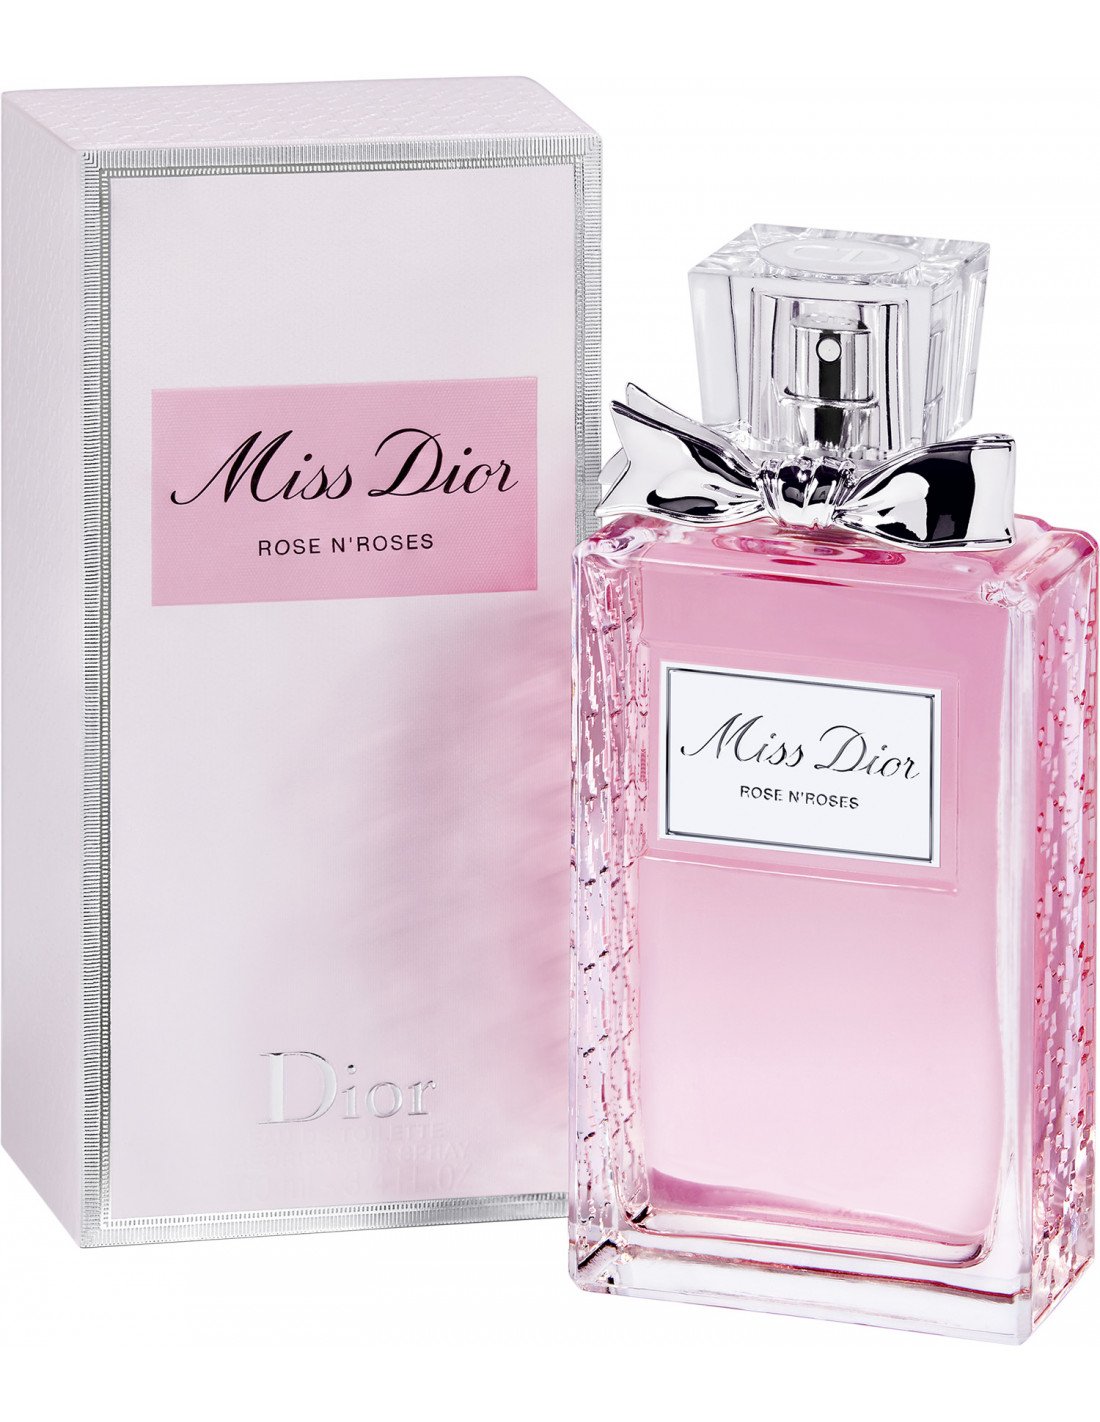 Miss Dior Rose n Roses 100ml edt .